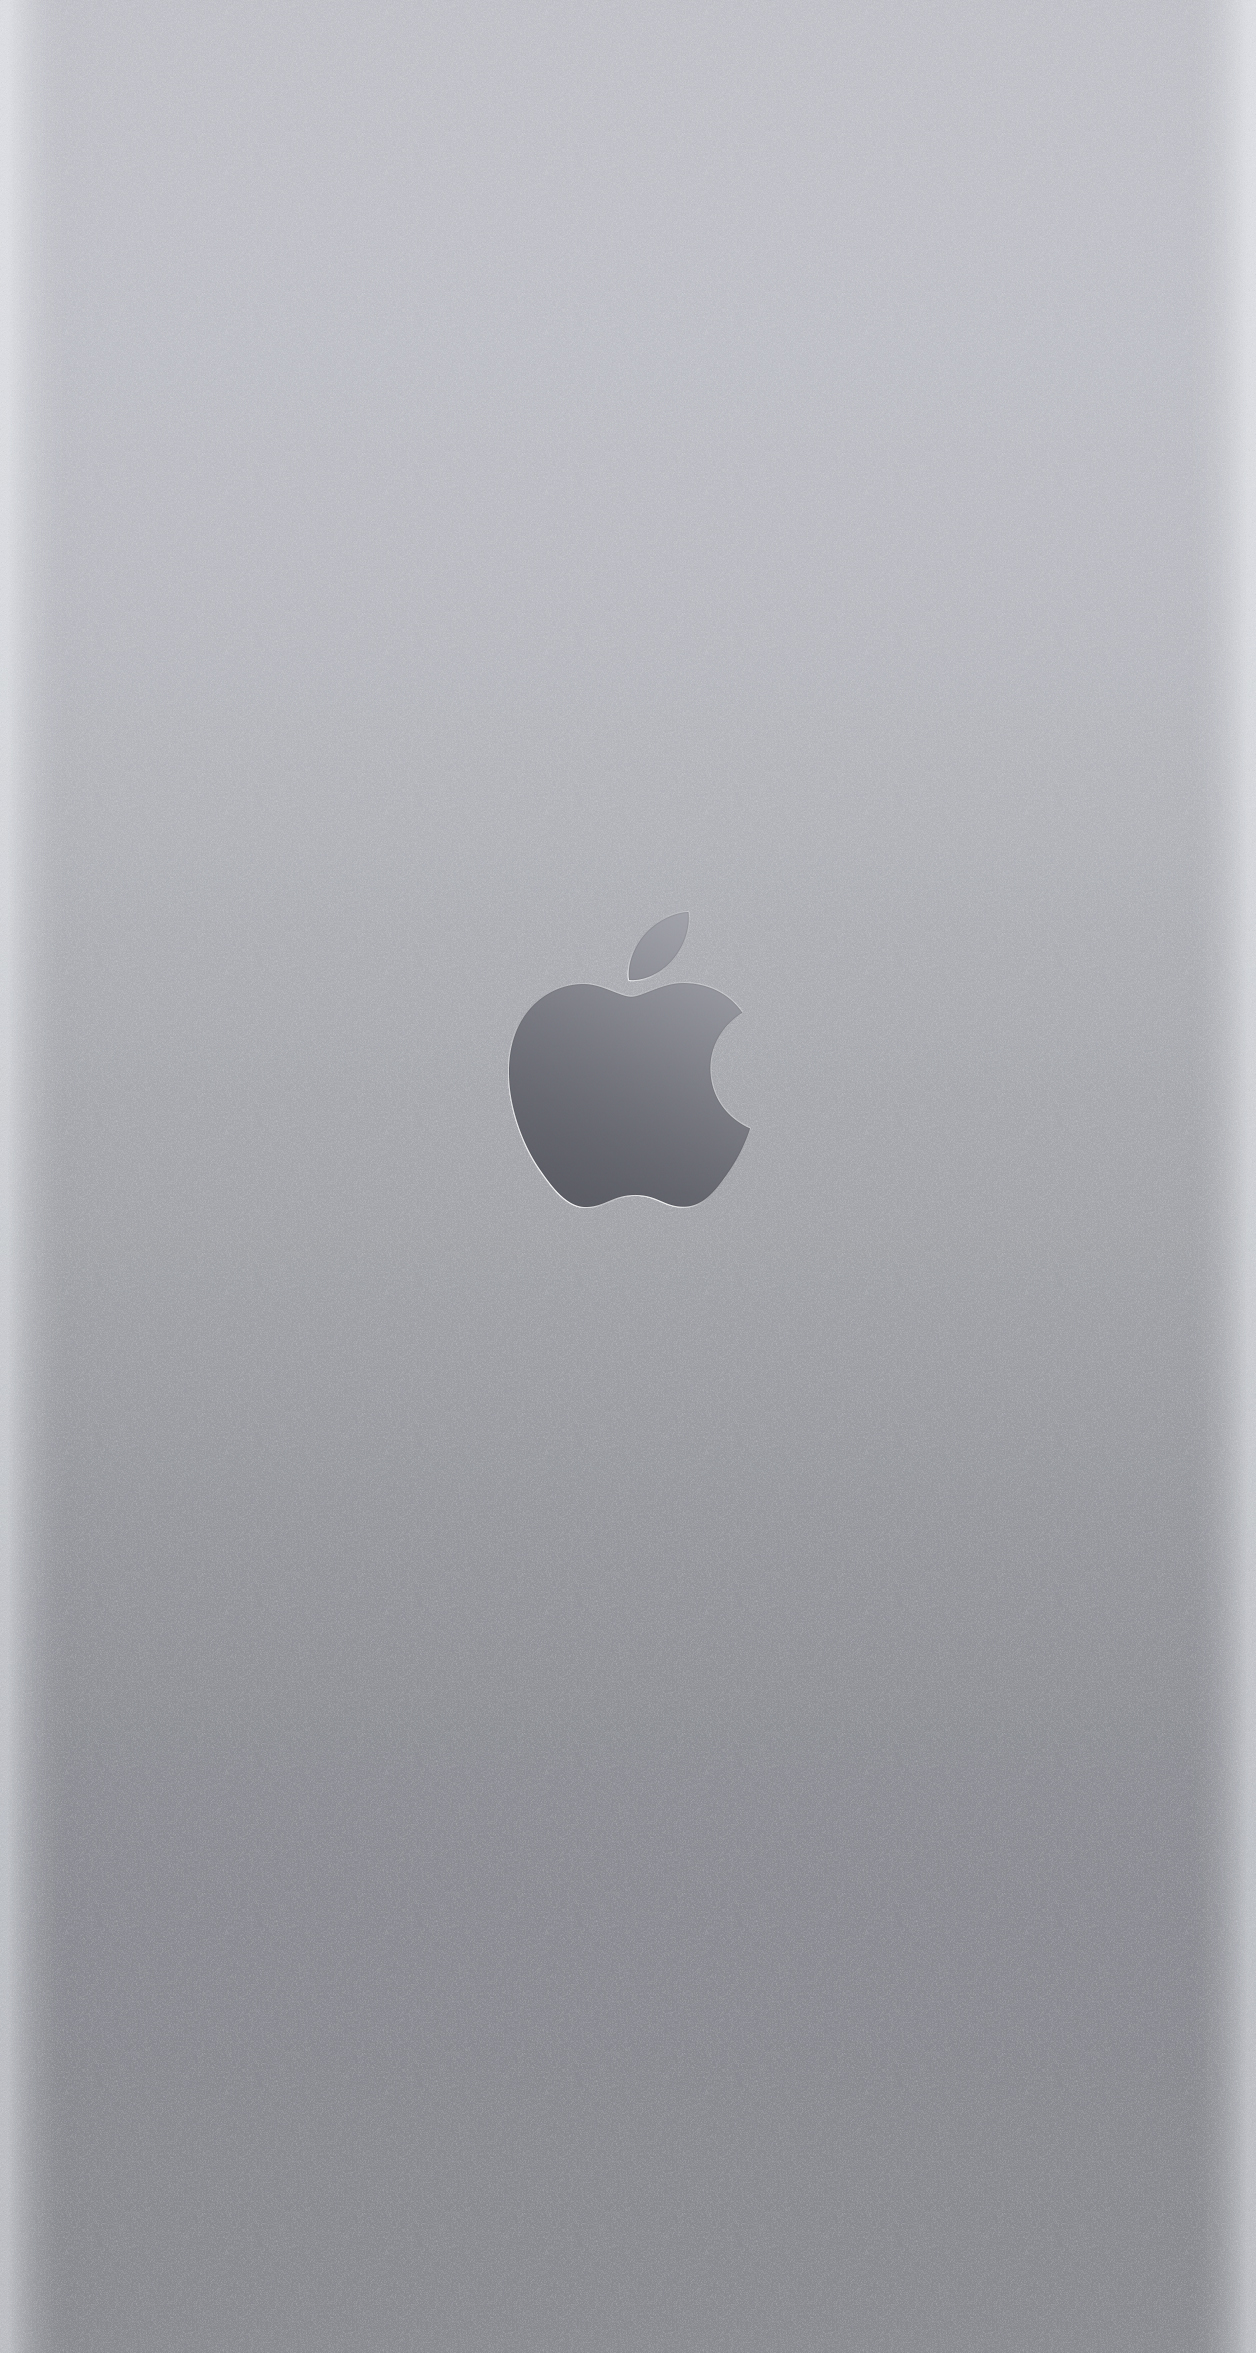 1pcs x Apple sticker 3D Domed Apple logo decals for MacBook | eBay